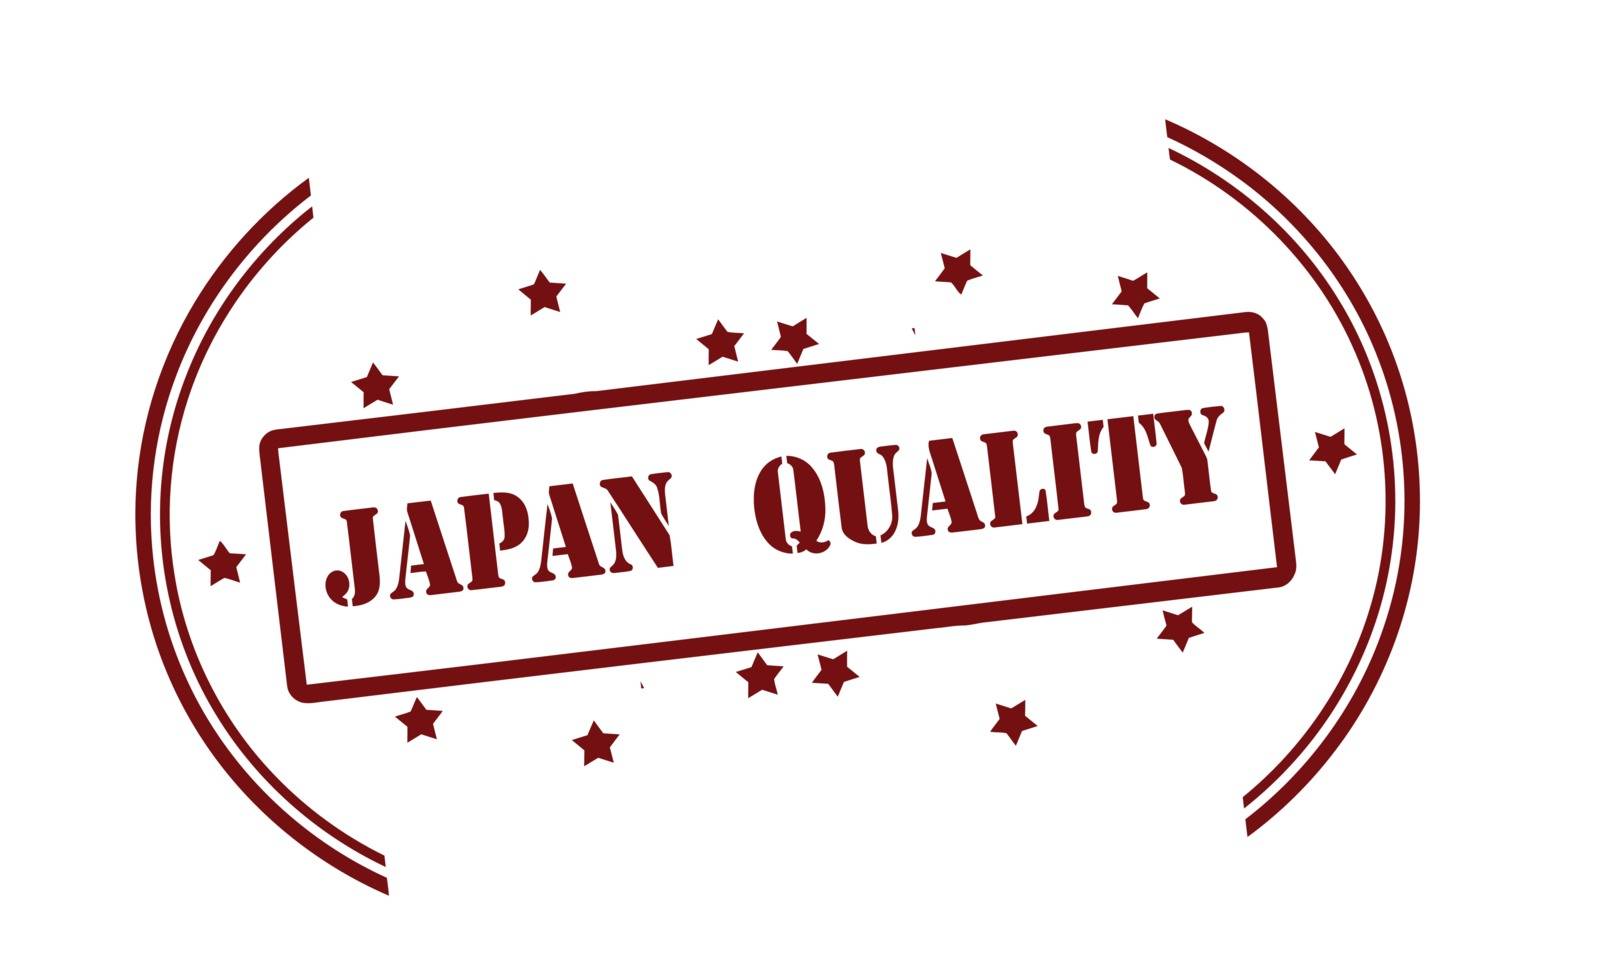 Japan quality by carmenbobo